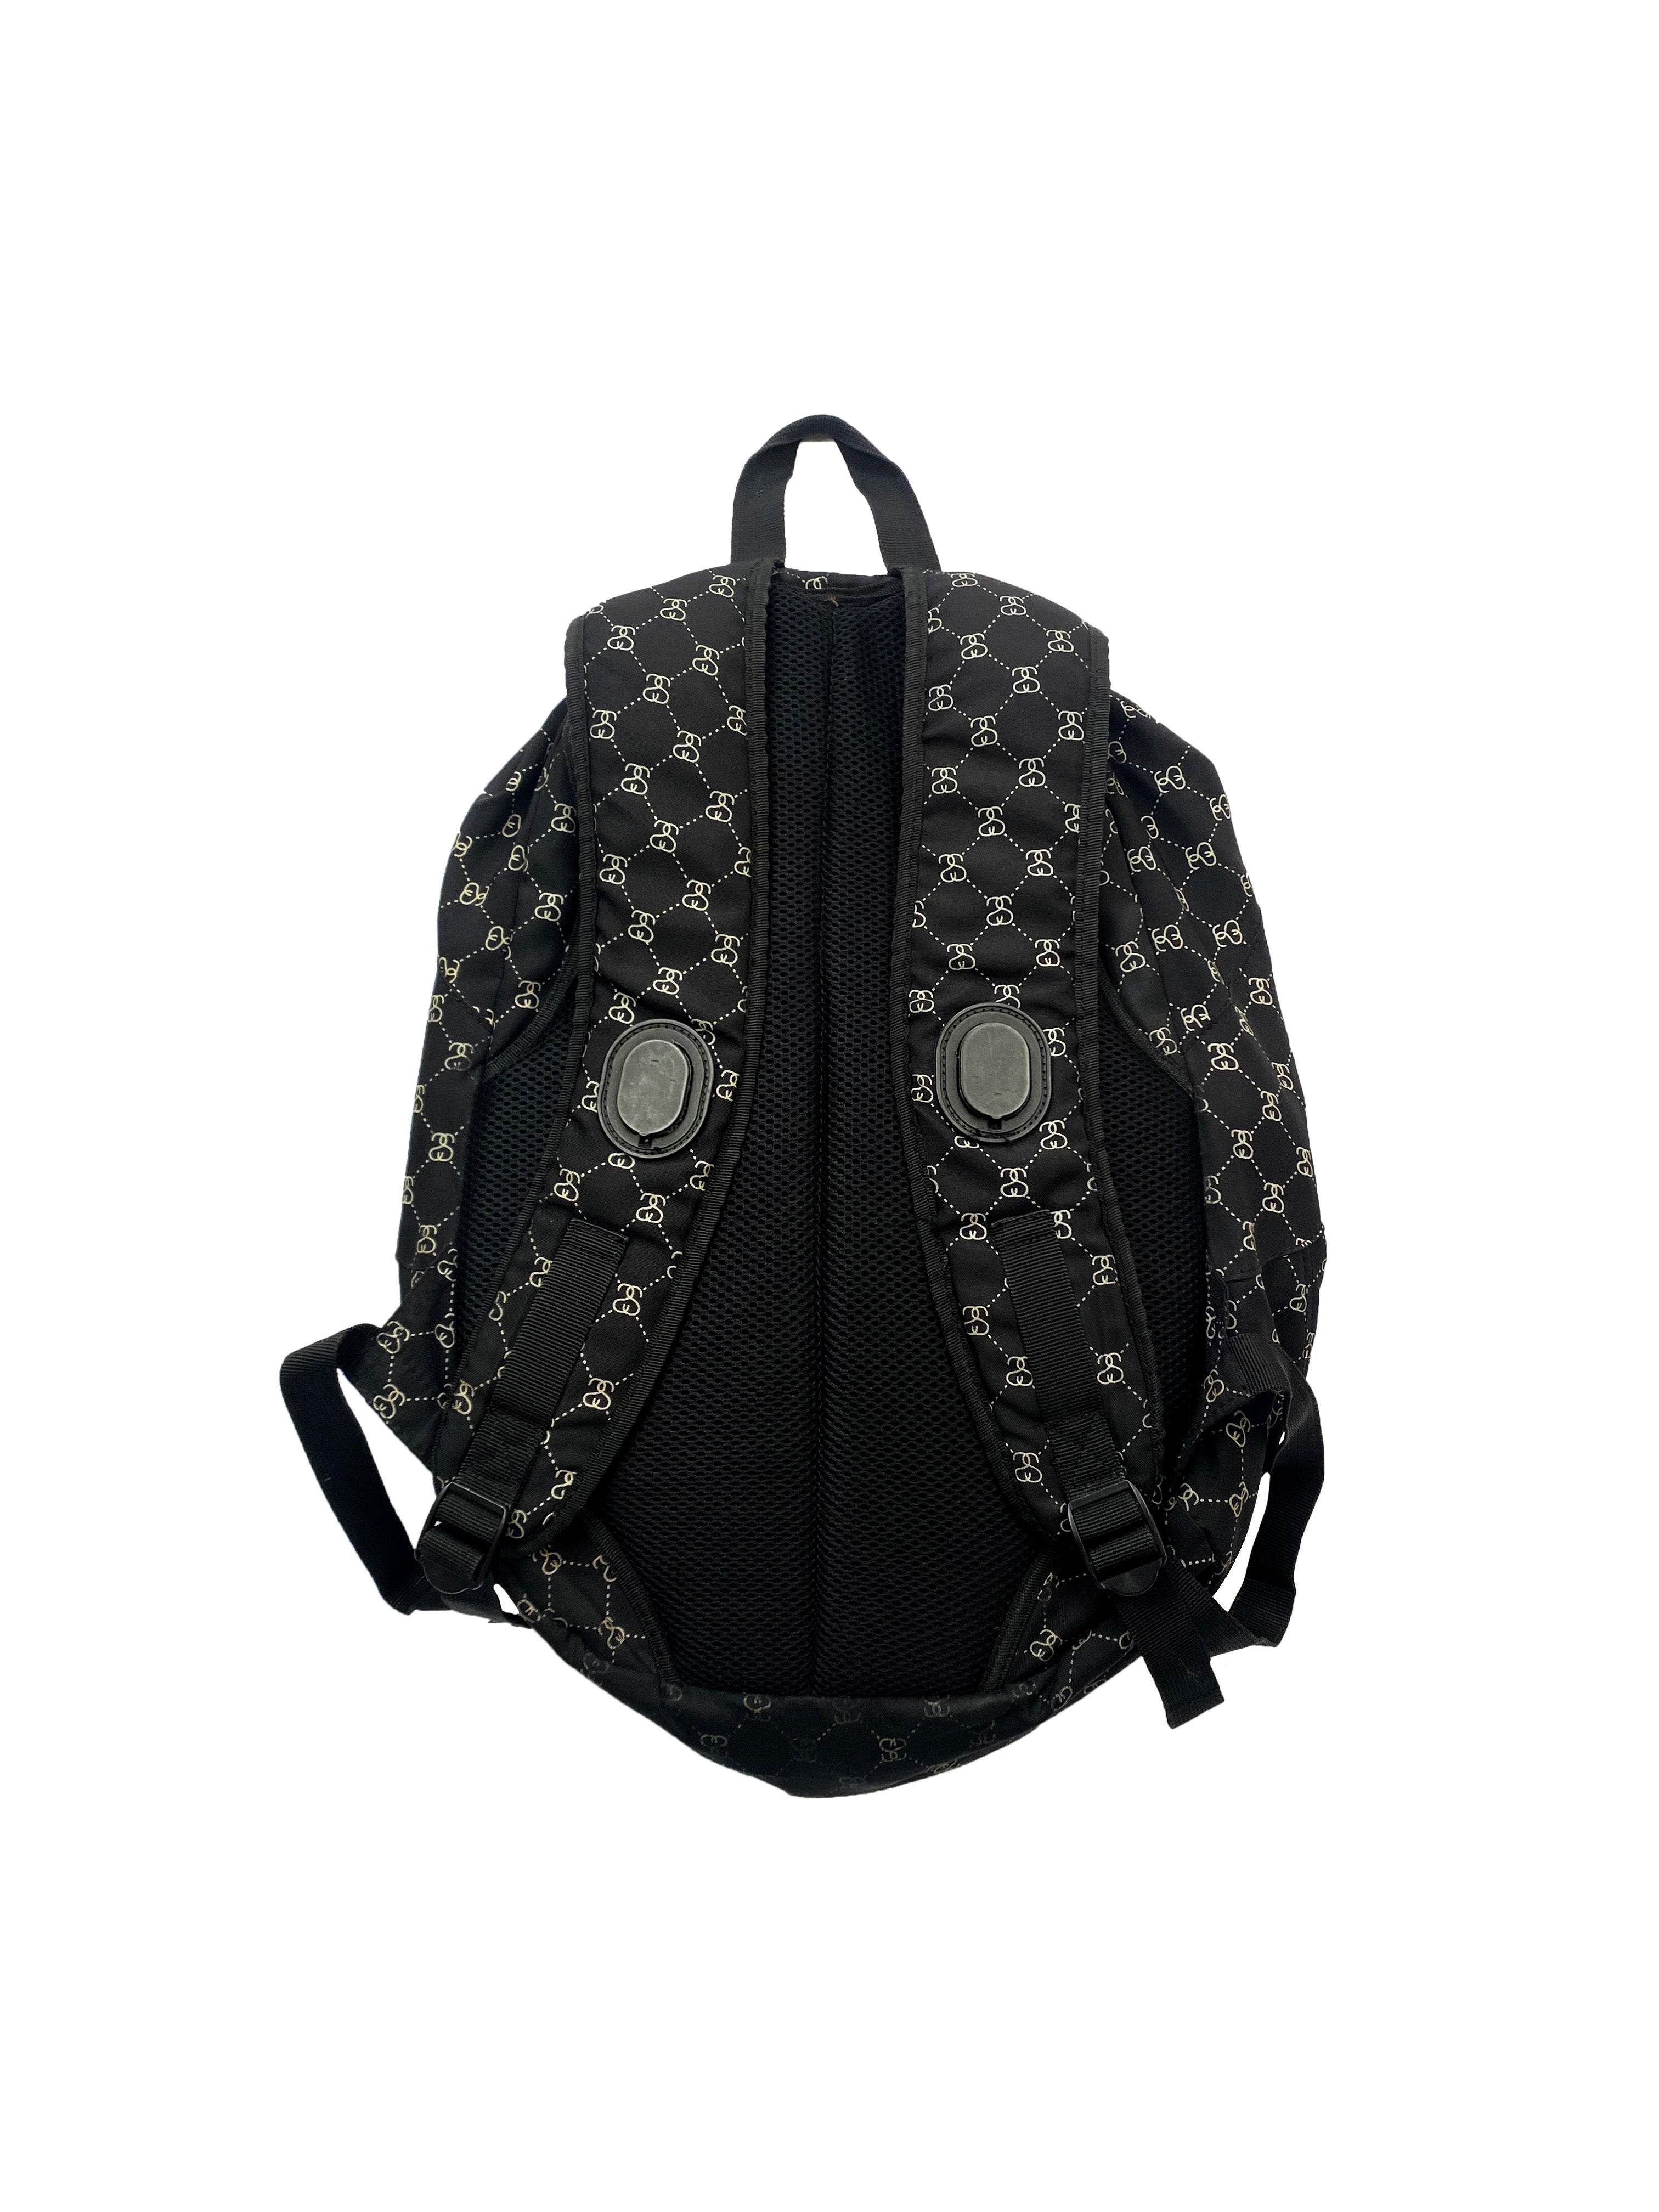 Stussy 'Gucci' Monogram Backpack 00's